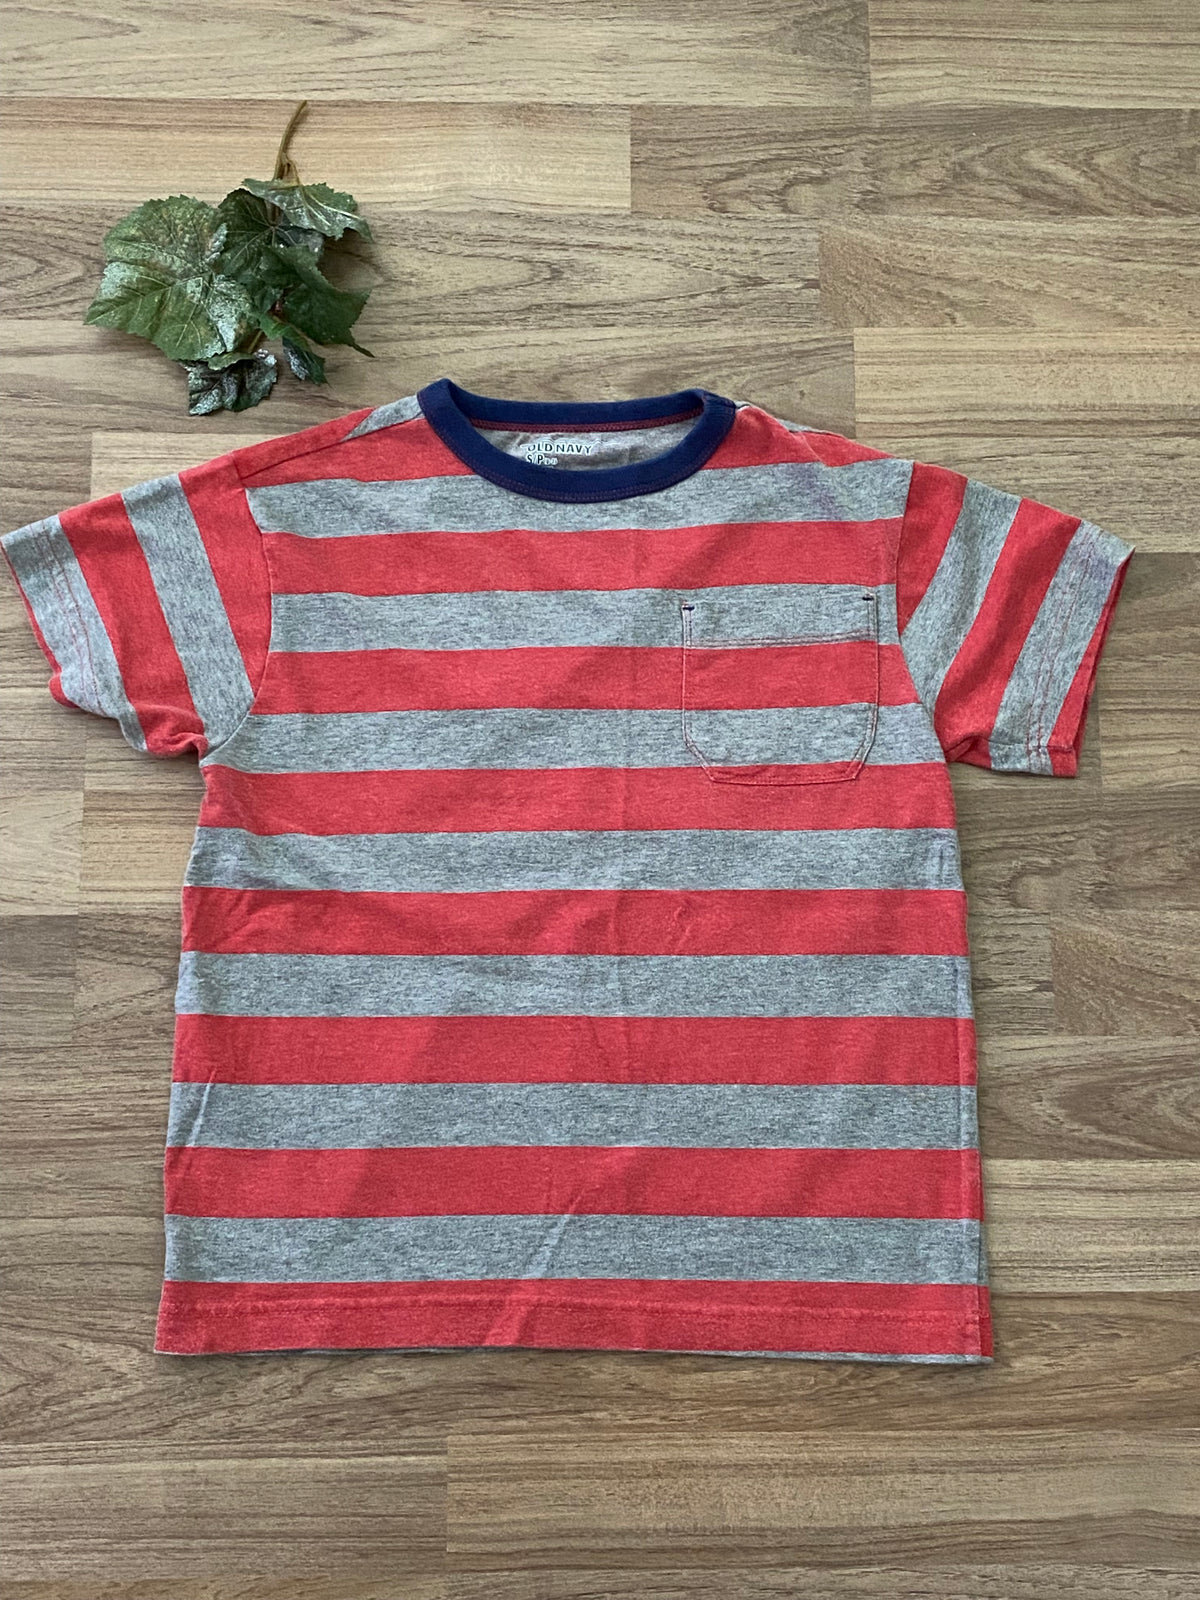 Short Sleeve Striped Top (Boys Size 6-7)